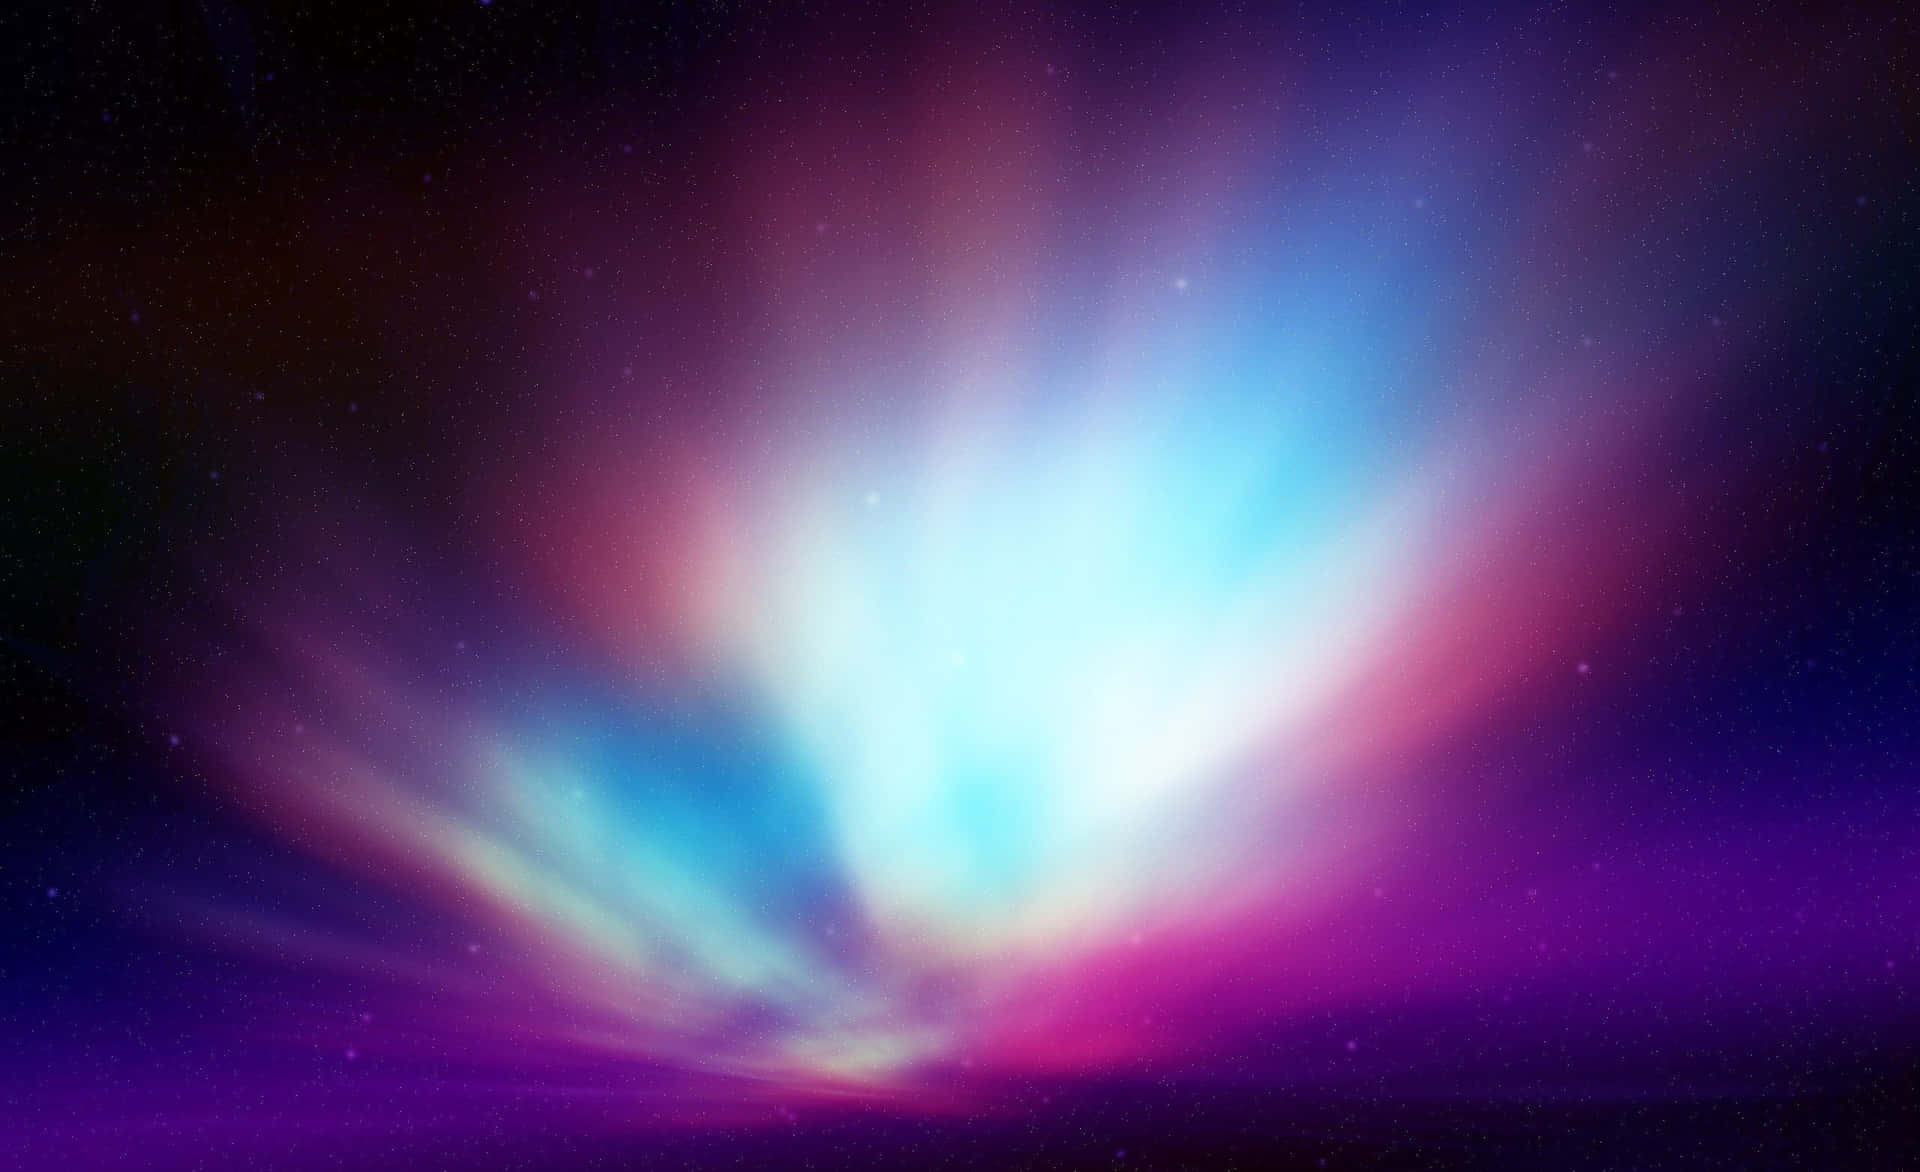 The majestic Aurora Borealis seen over a snow-covered Nordic landscape